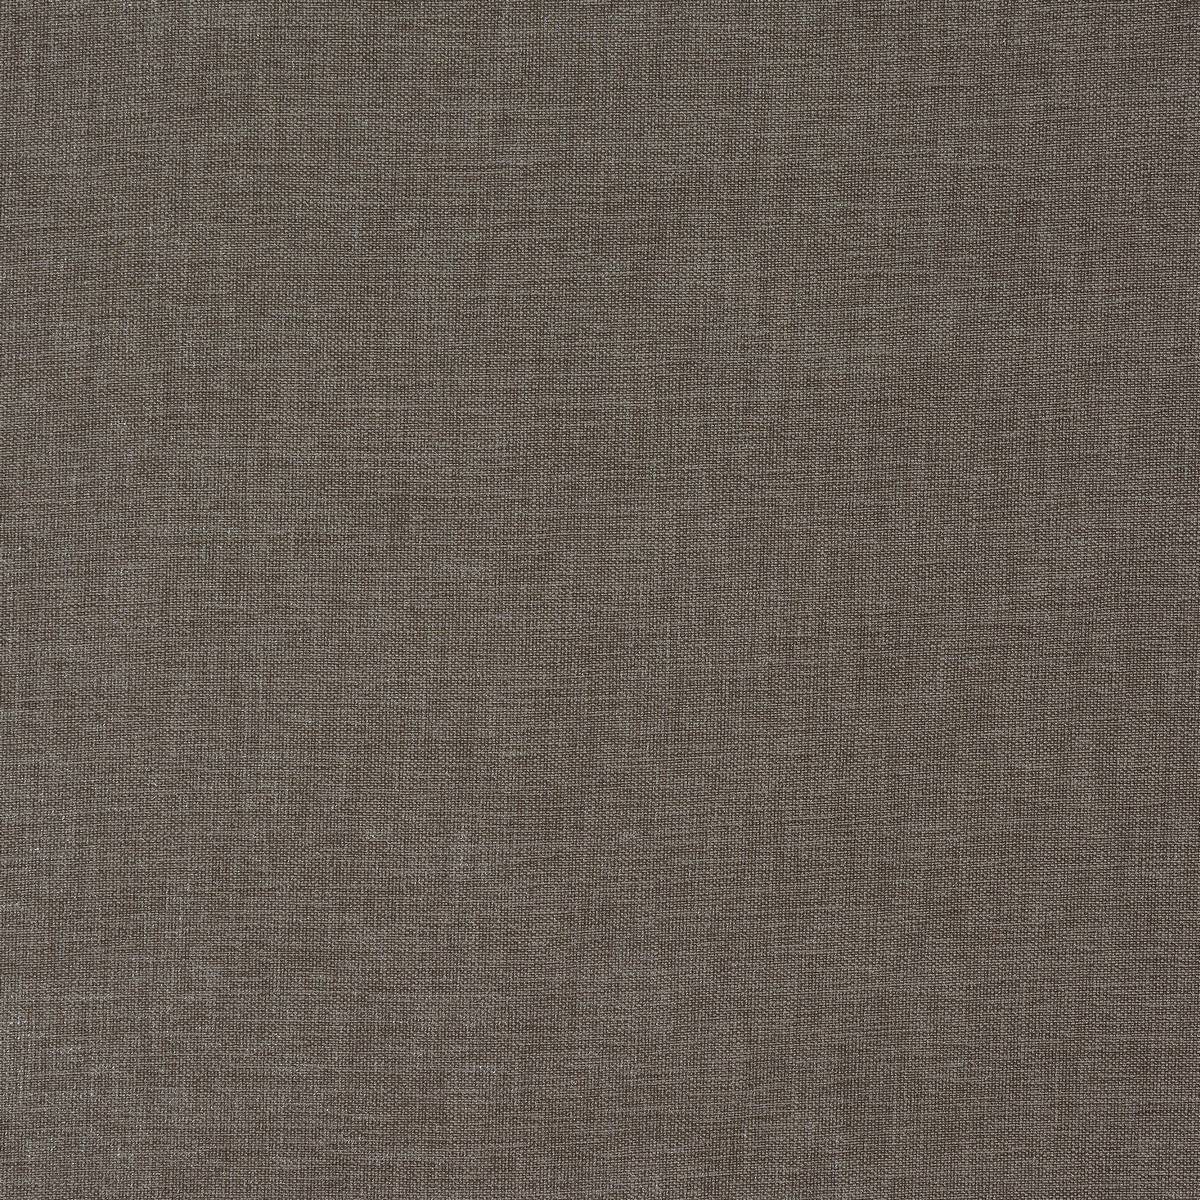 Nirvana Soft Grey Fabric by Fryetts